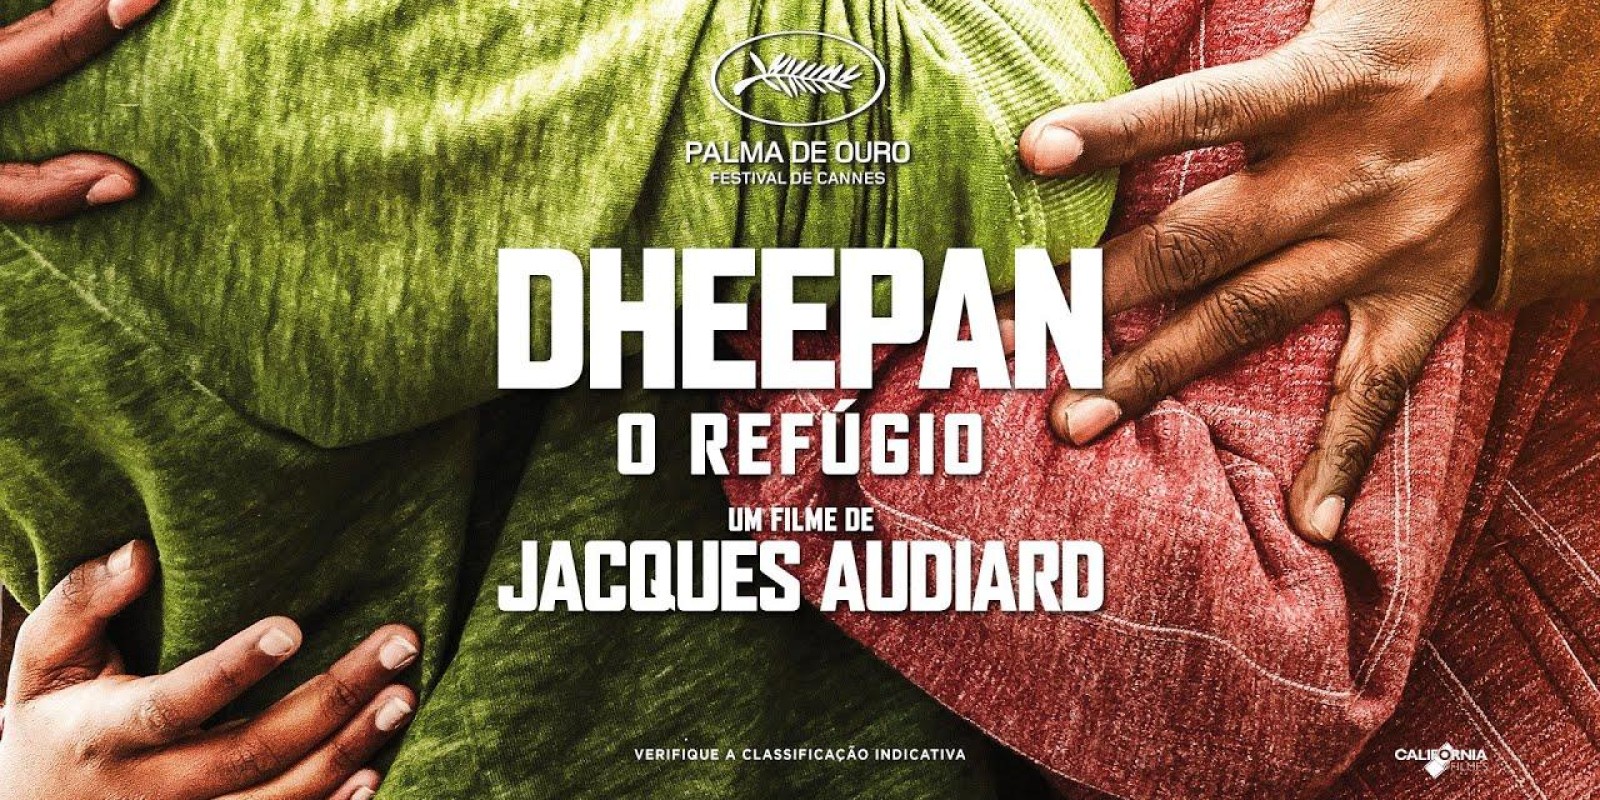 'Dheepan' estreia no Brasil e mostra dilema de refugiados na Europa